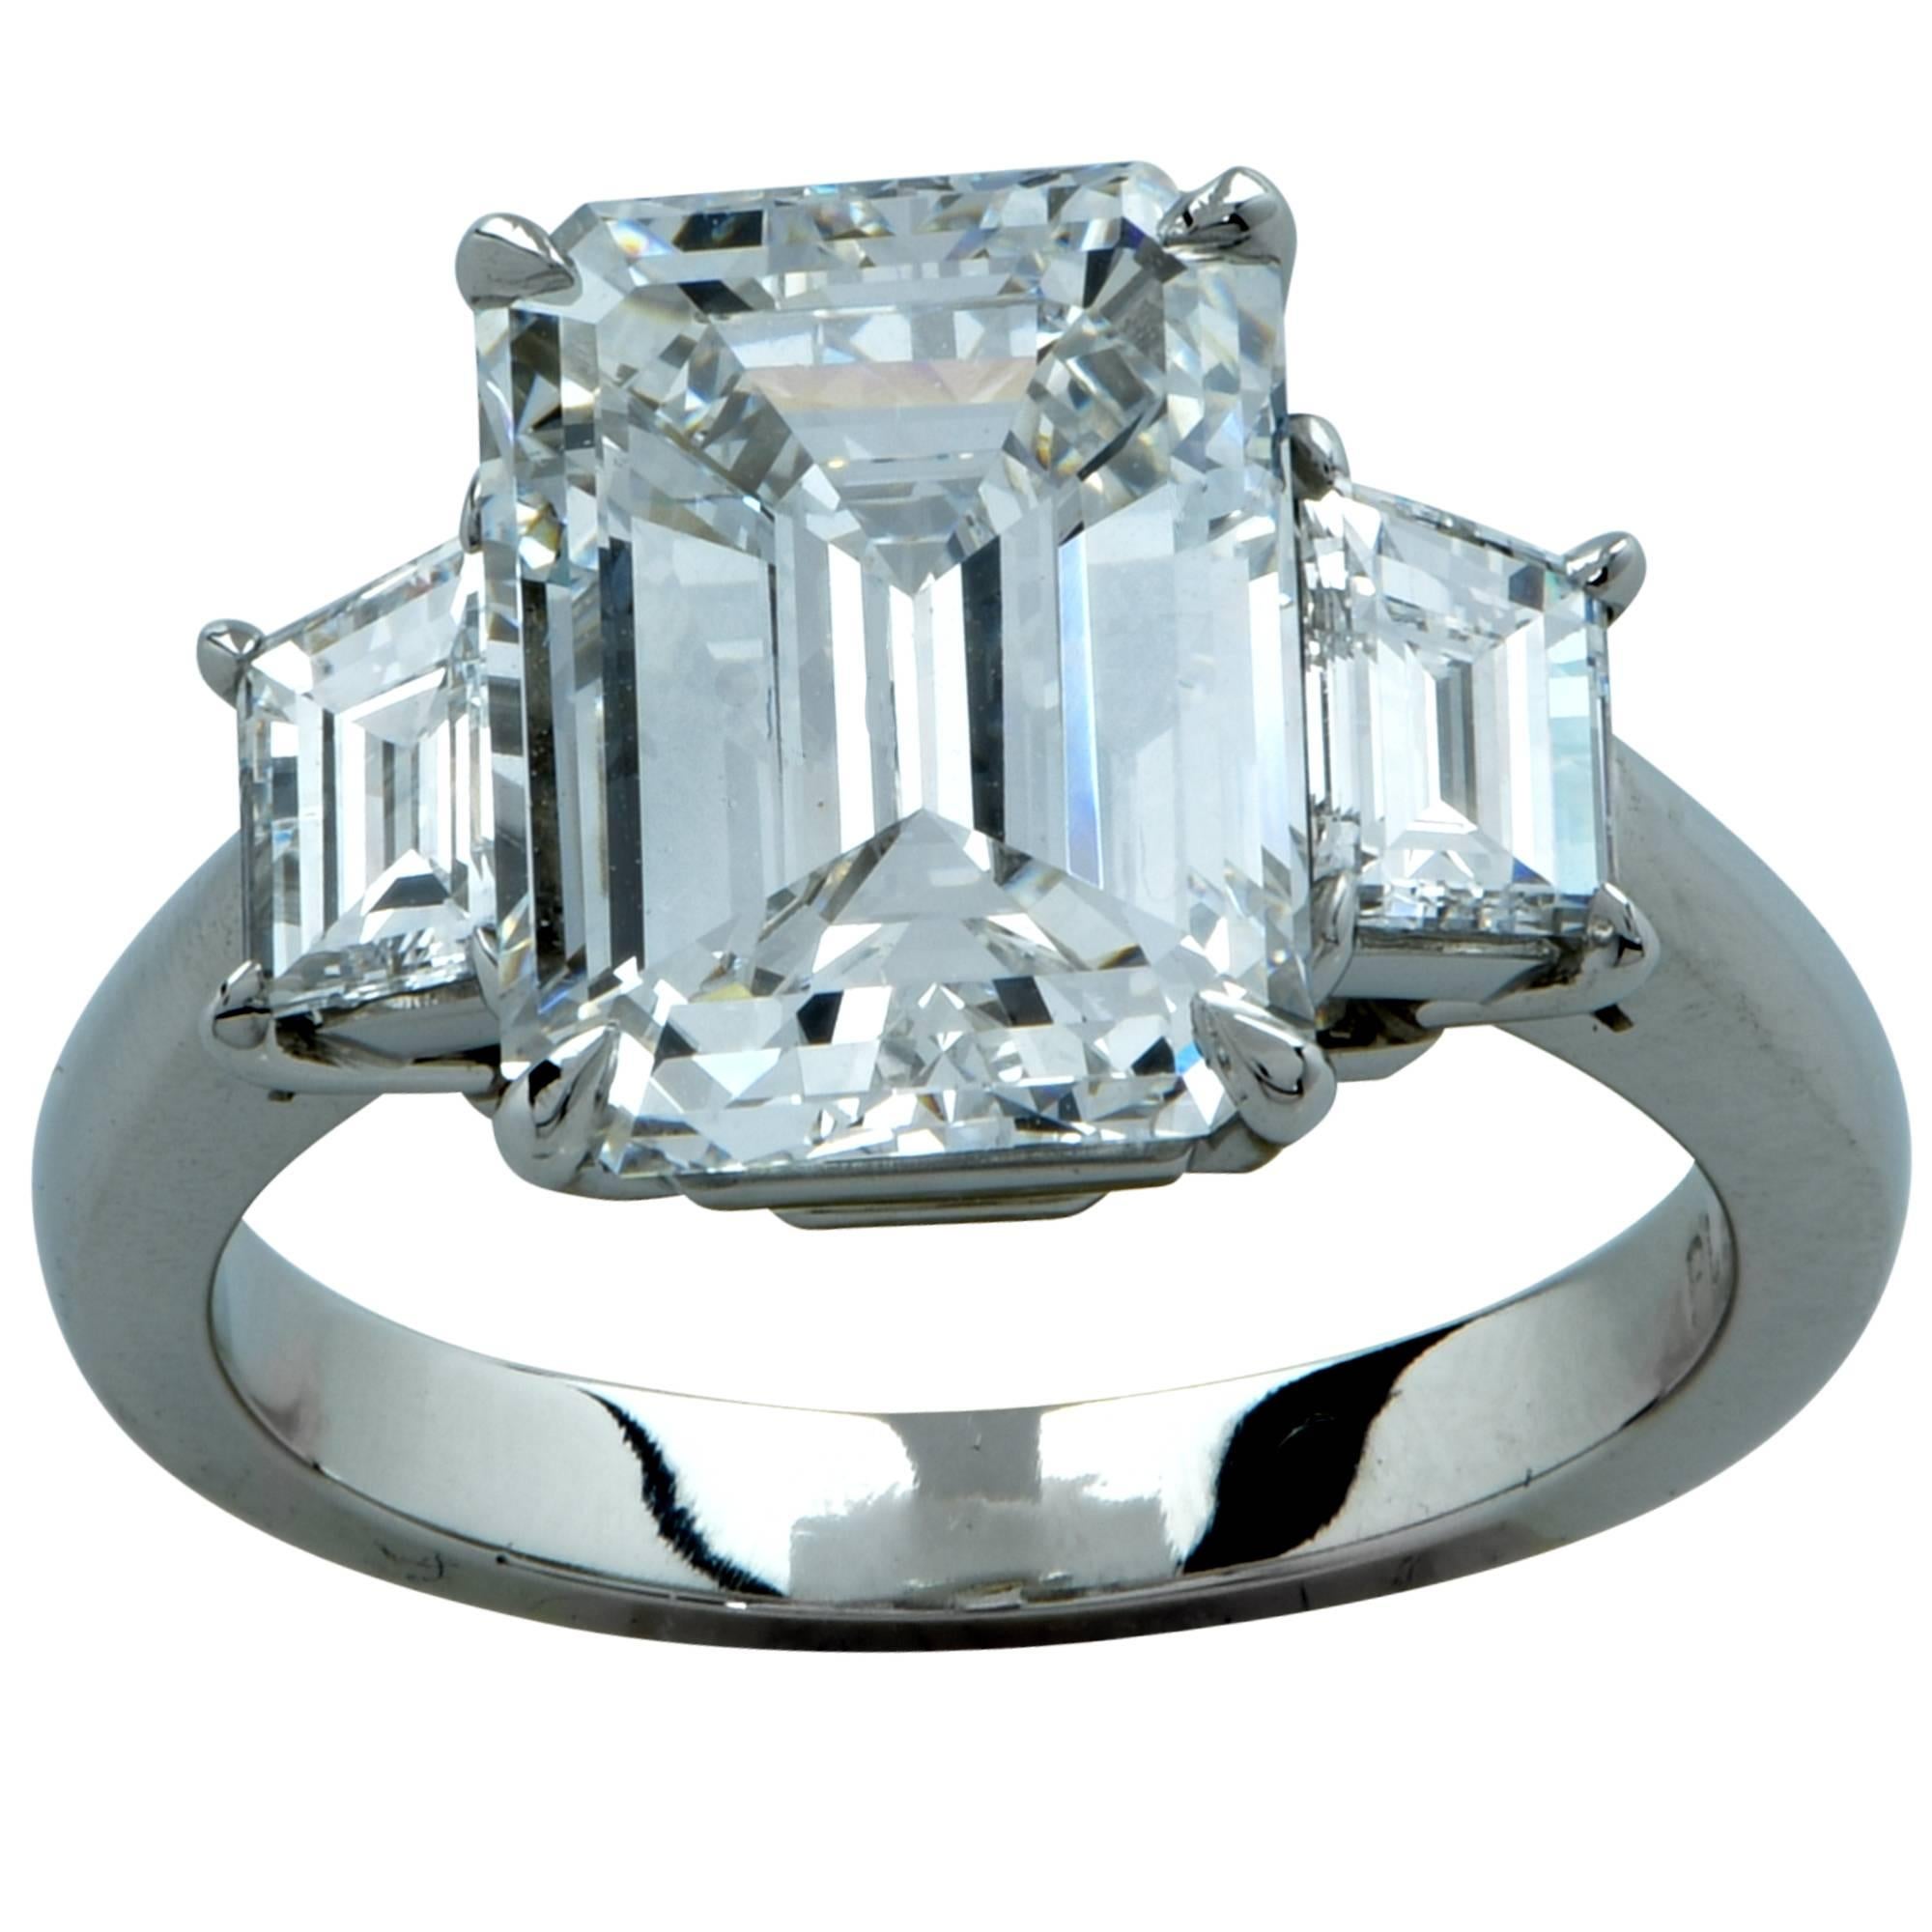 3.74 Carat Emerald Cut Diamond GIA Graded Engagement Ring